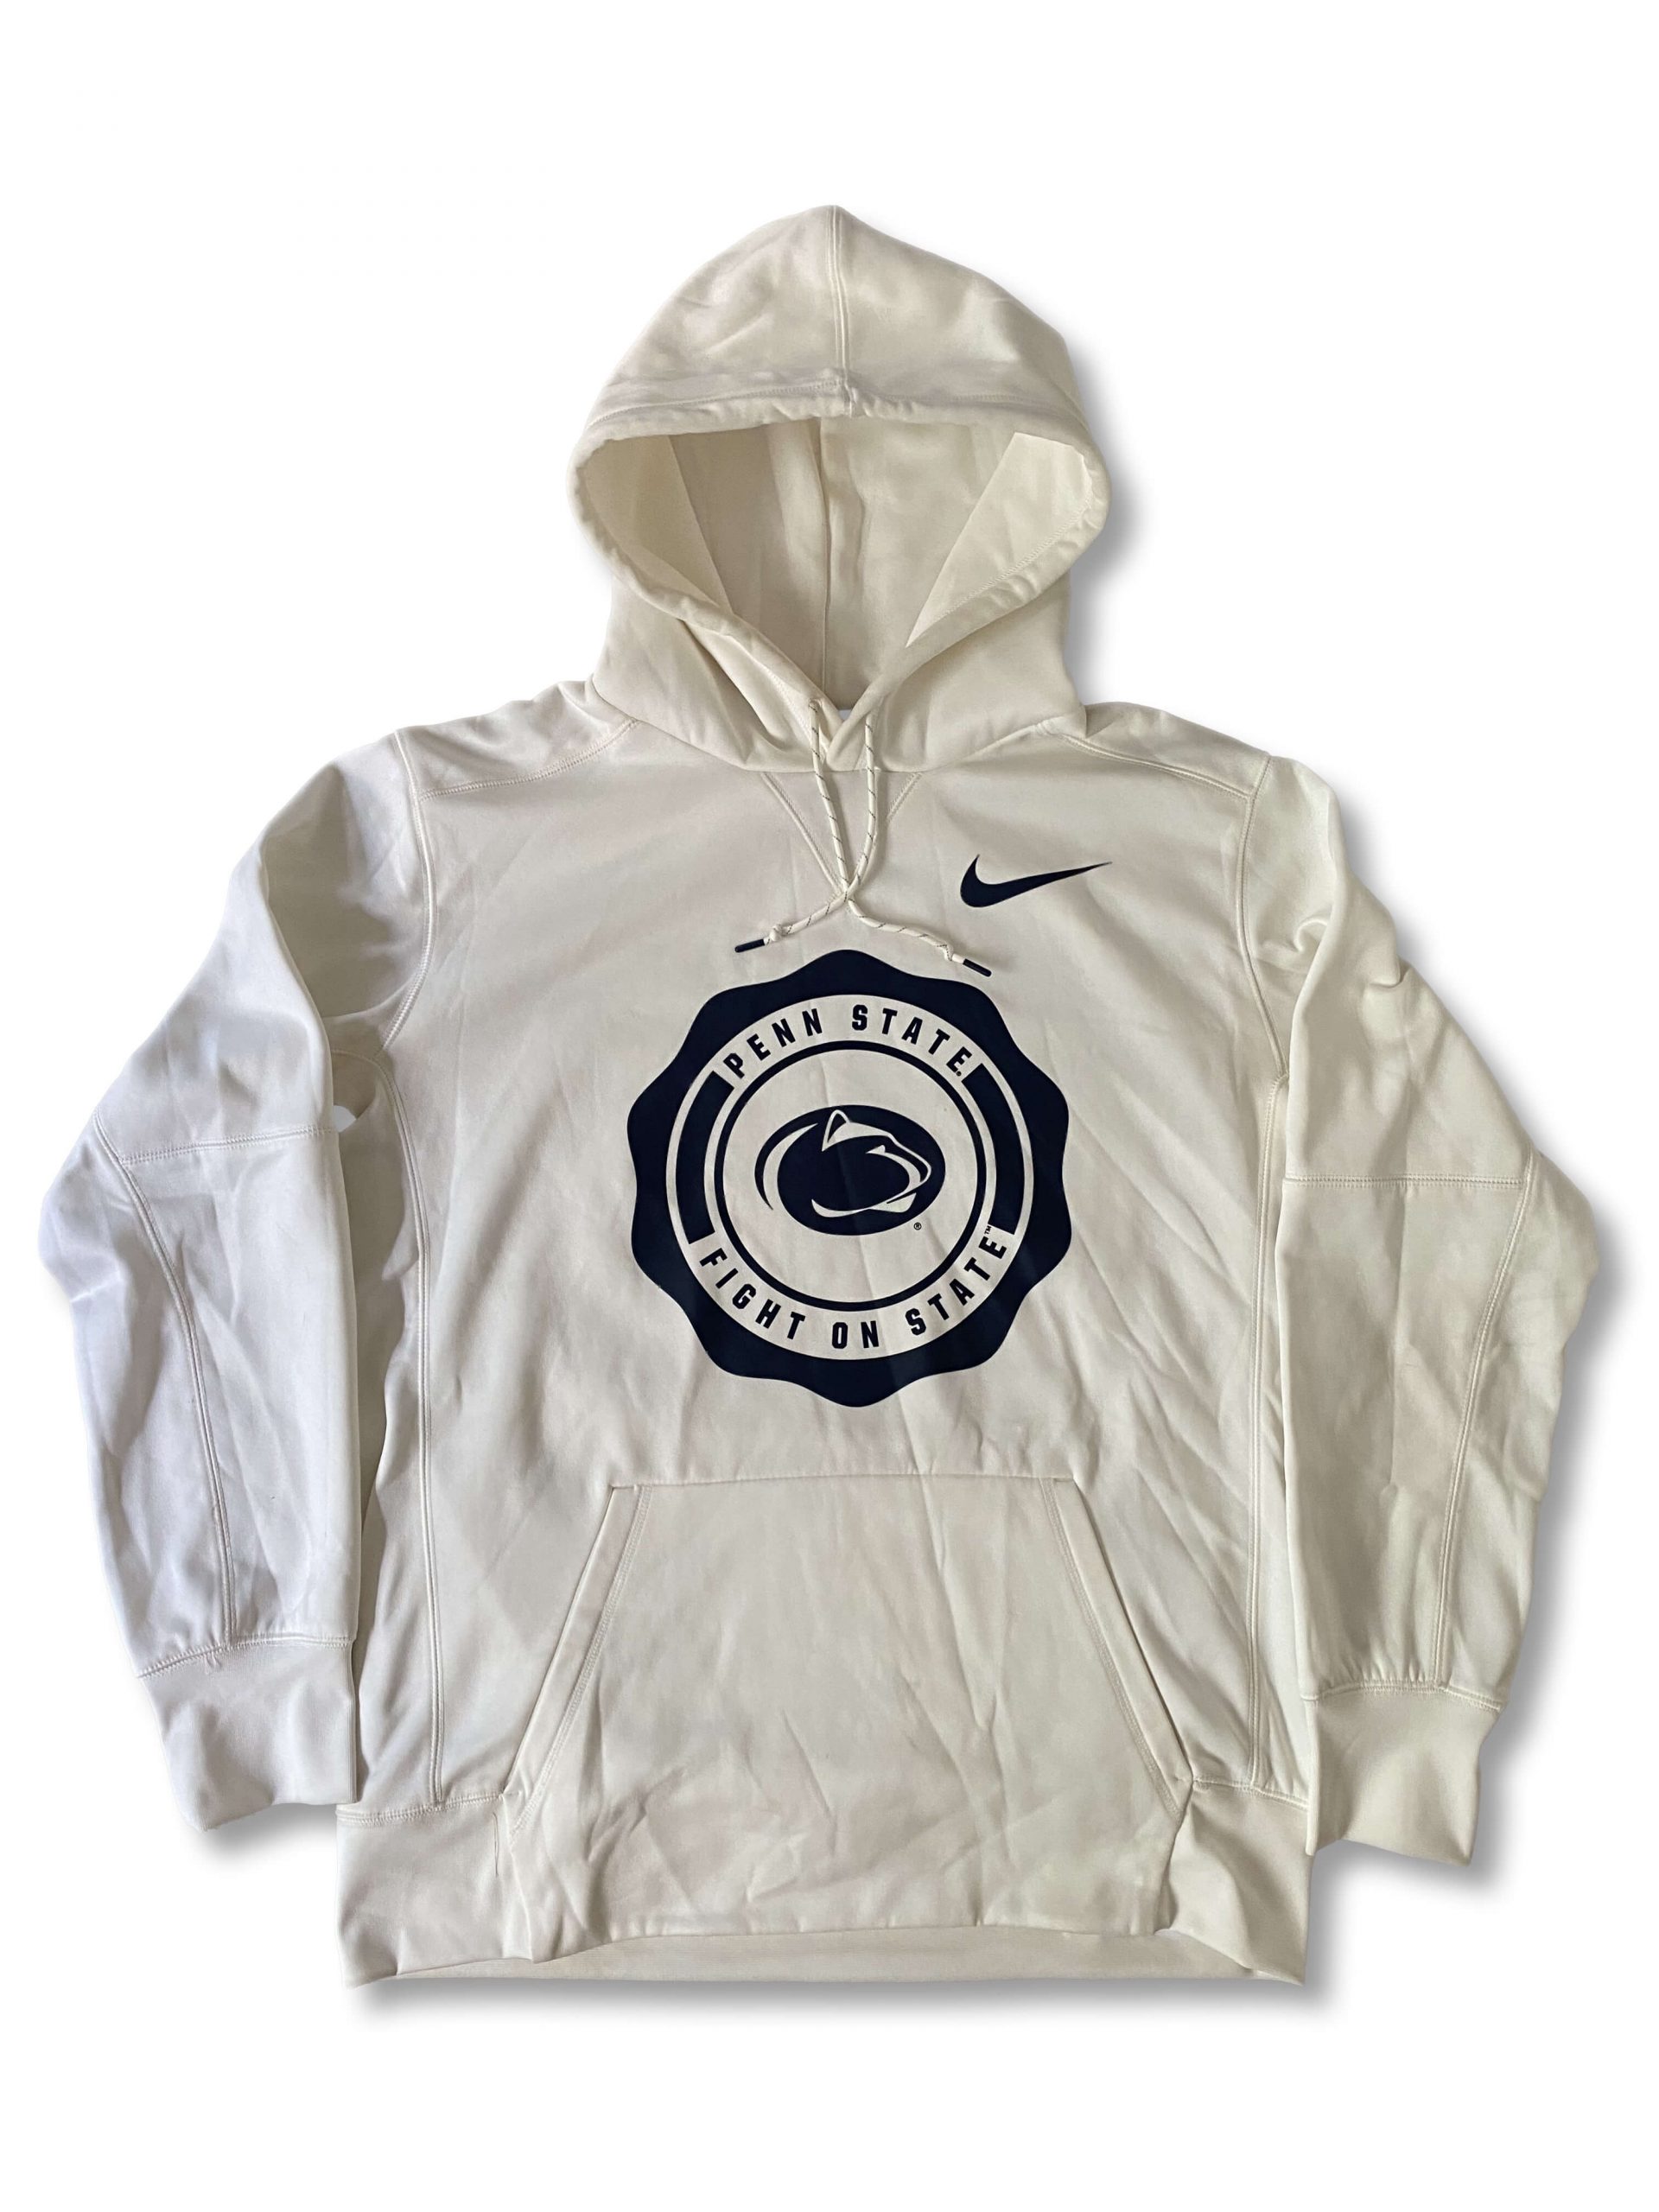 Penn State Football Hoodie : NARP Clothing